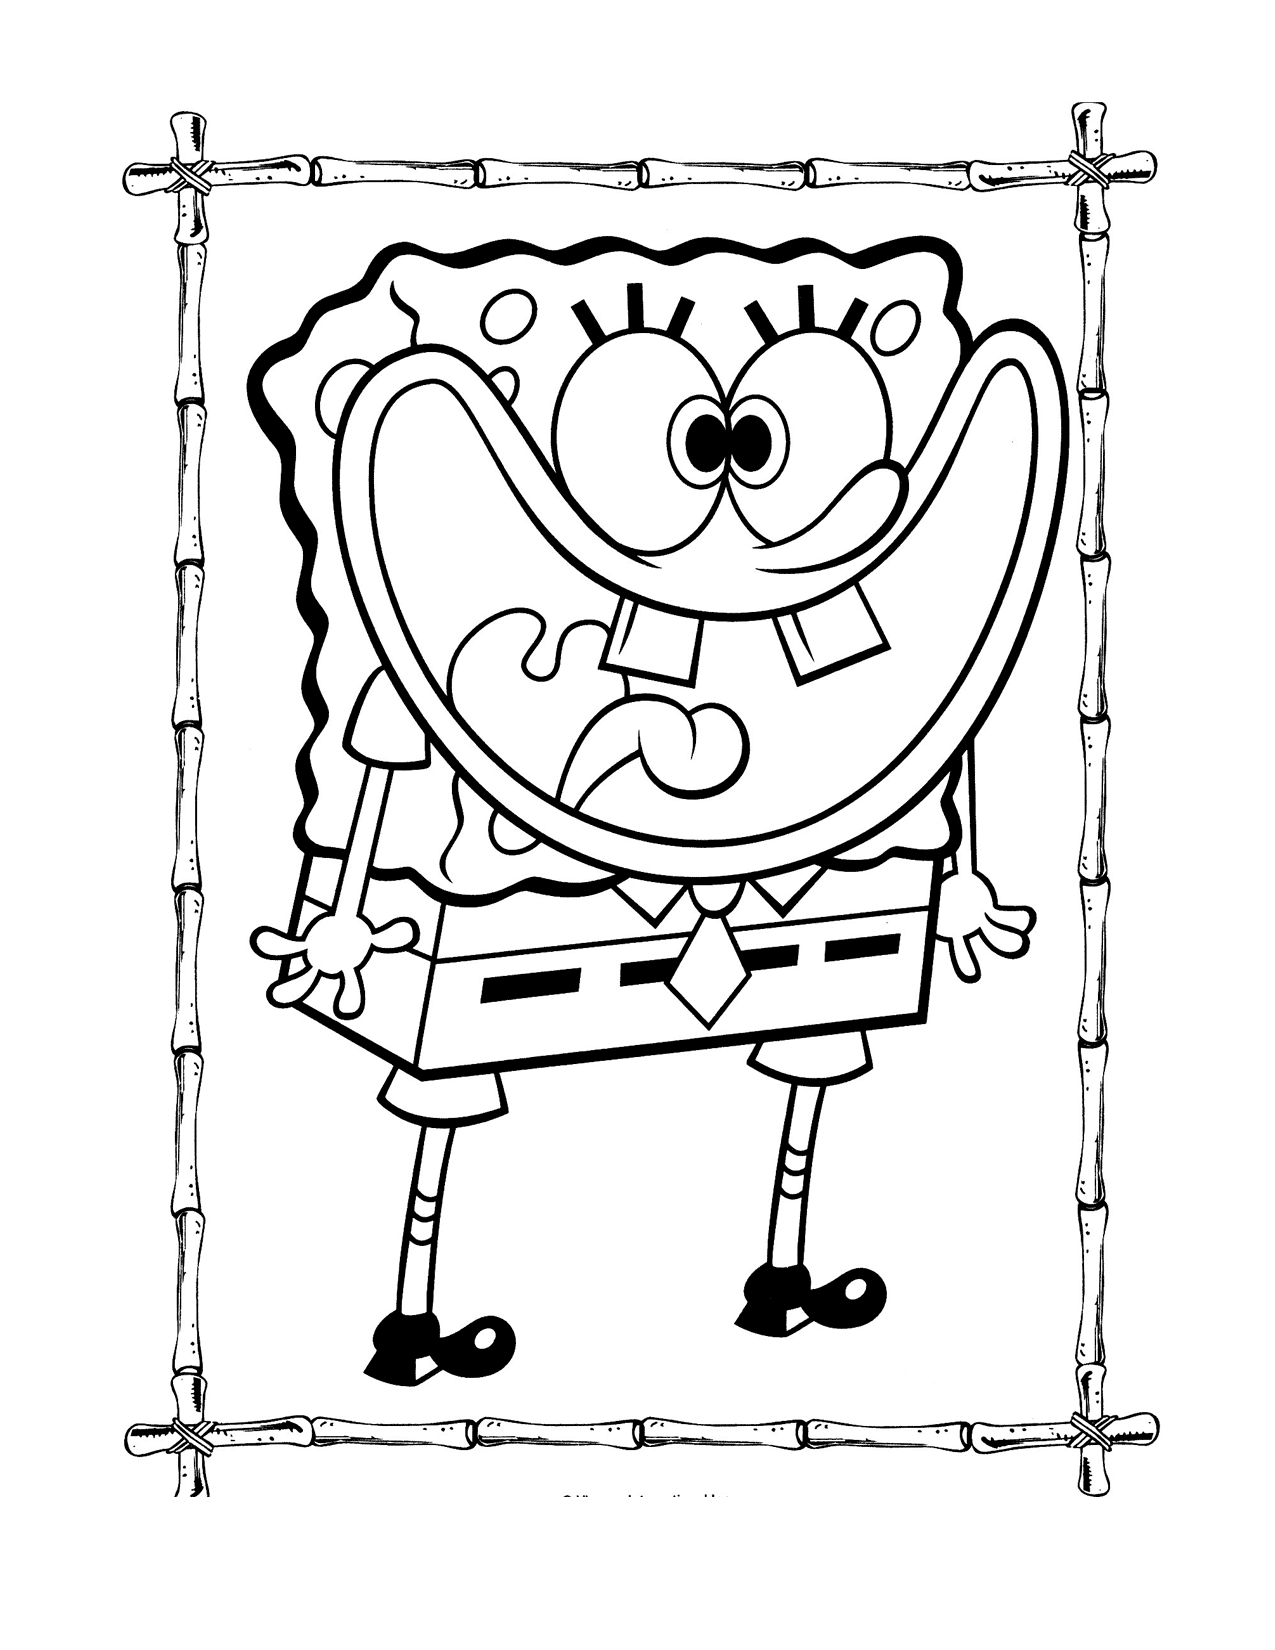 Sponge Bob Funny Face Coloring Page